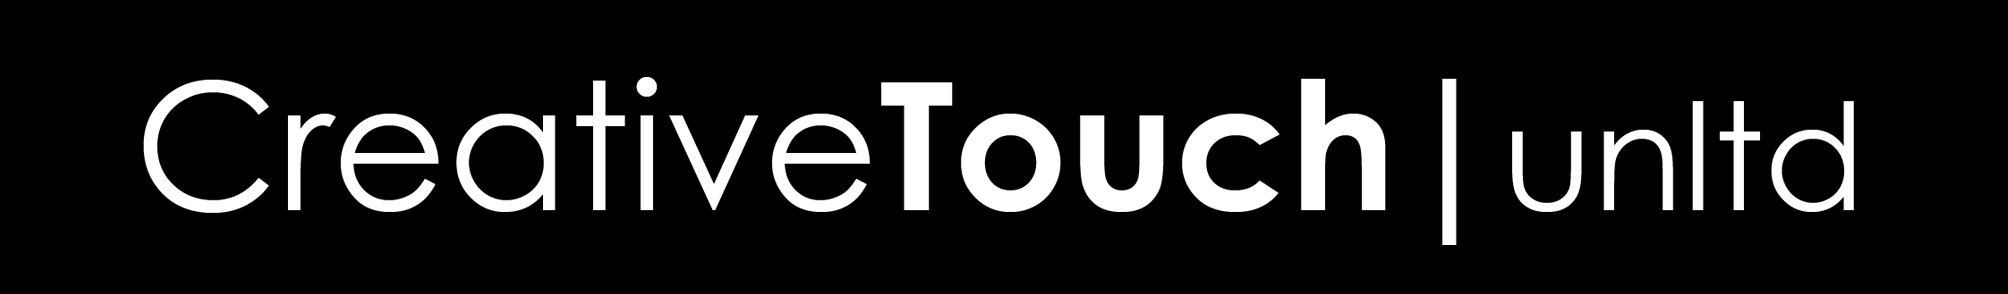 creativetouch logo